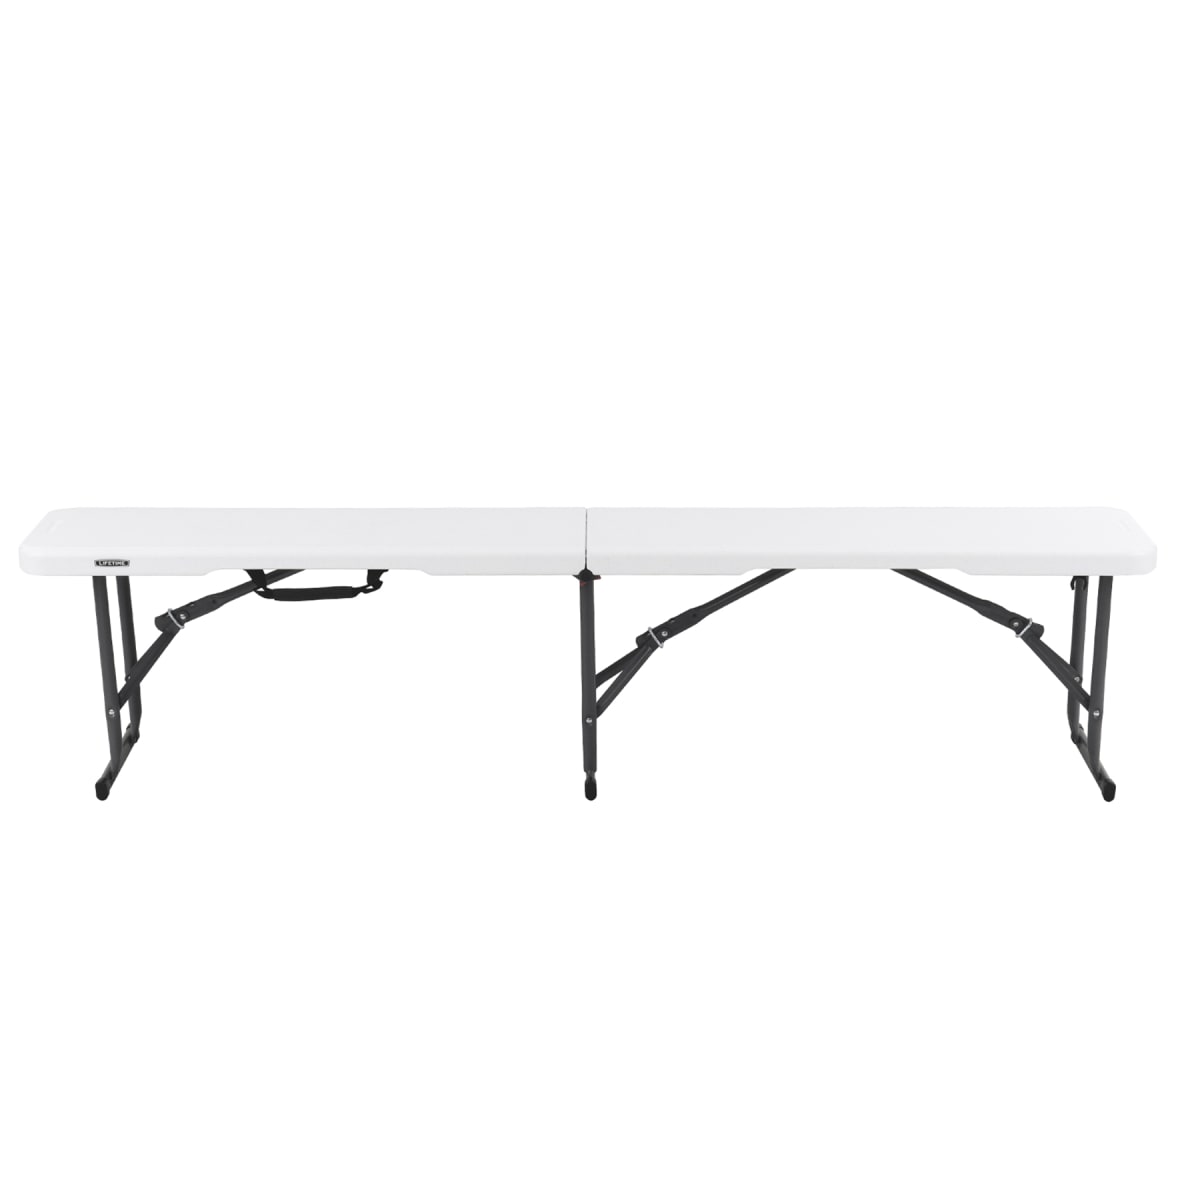 LIFETIME NAZERAL - Folding steel and polypropylene garden bench - White - 28x183xh43